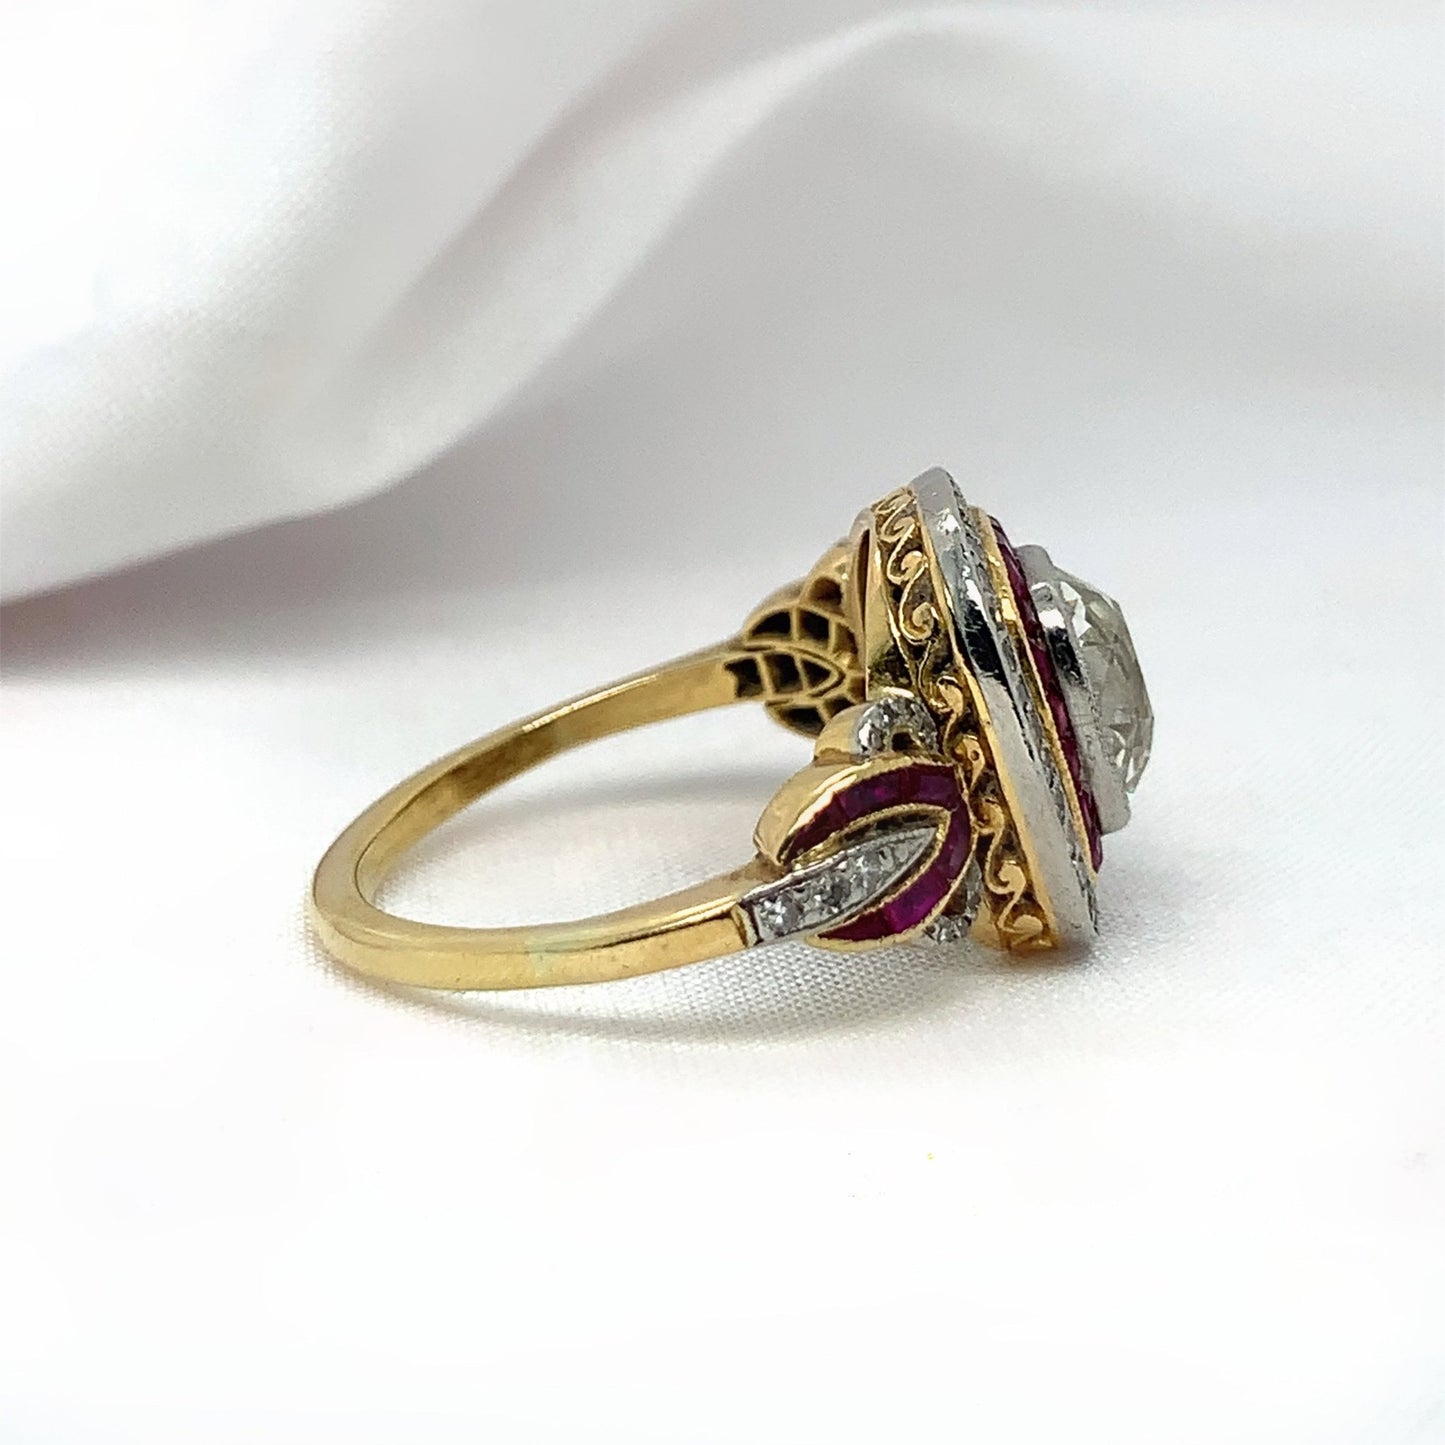 "Pierrette" - Unique Ring - Ebony Jewellery